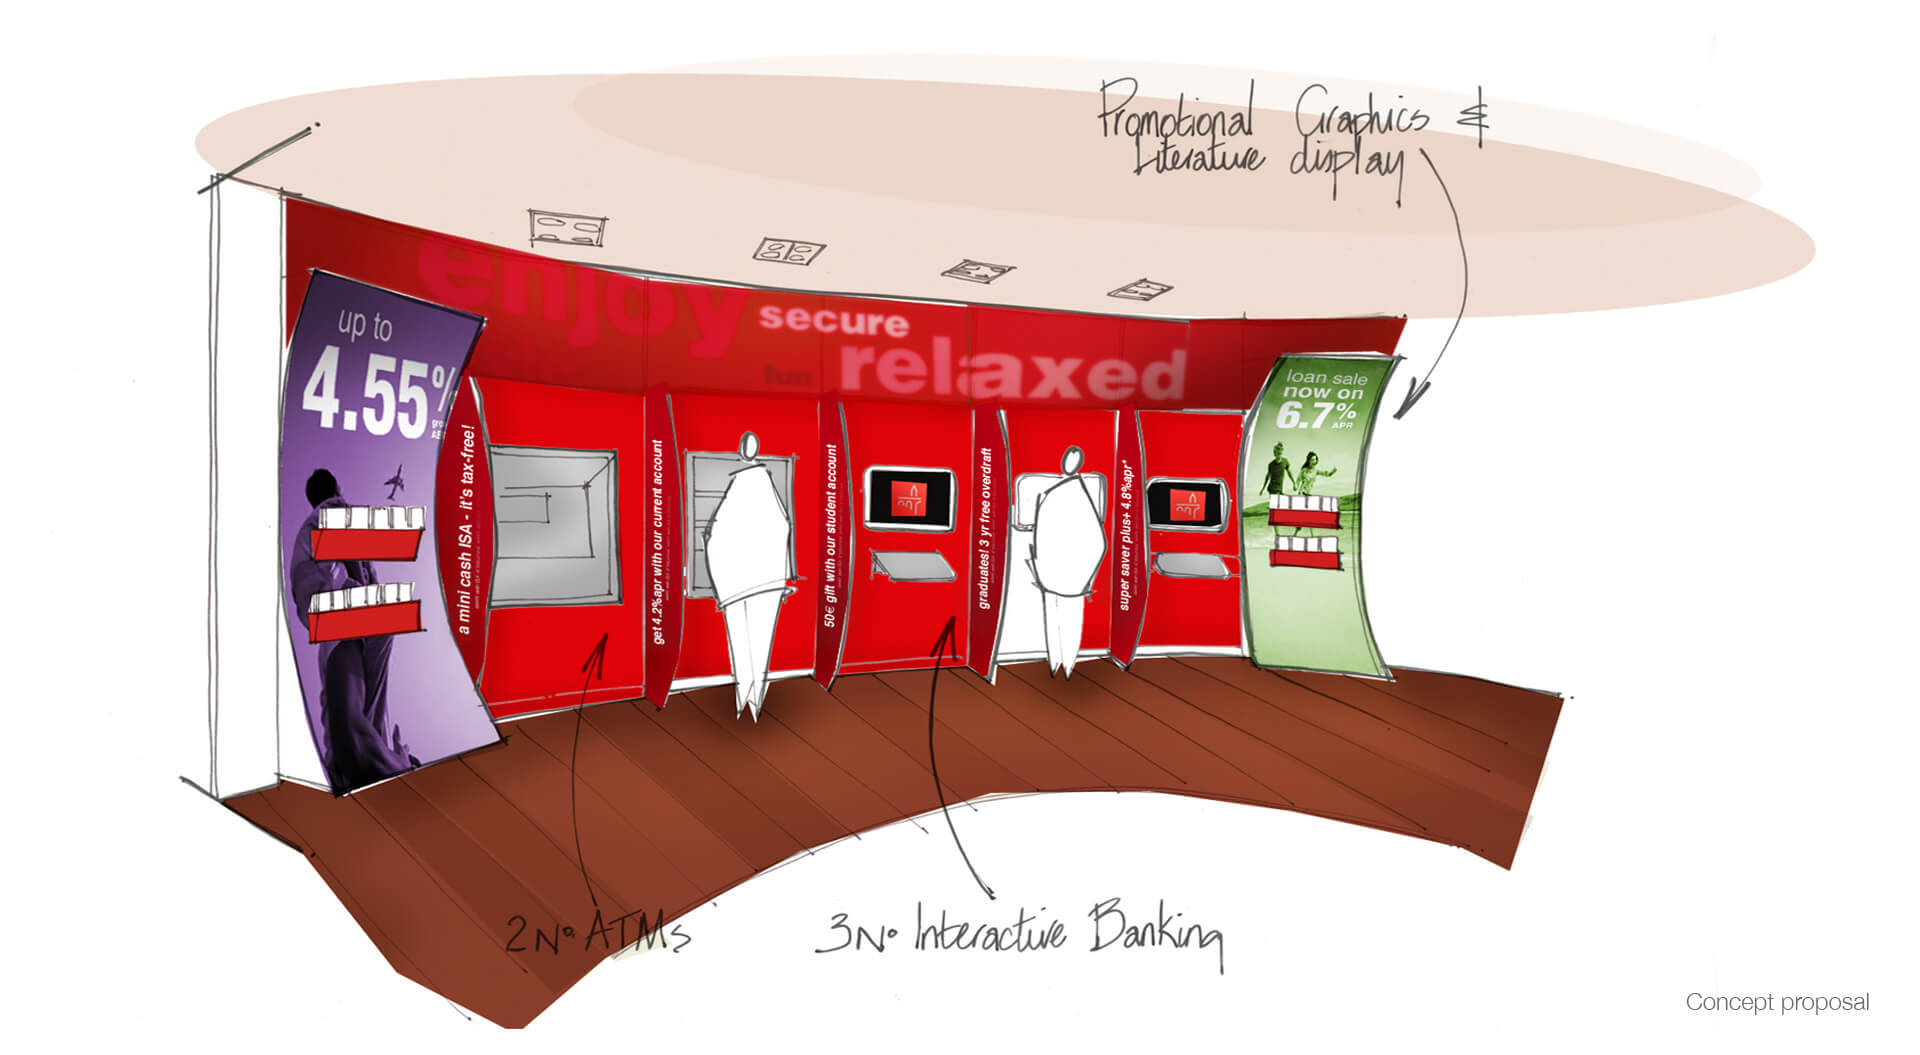 HSBC bank branch innovation future rebrand concepts, inspiring sketch ideas 